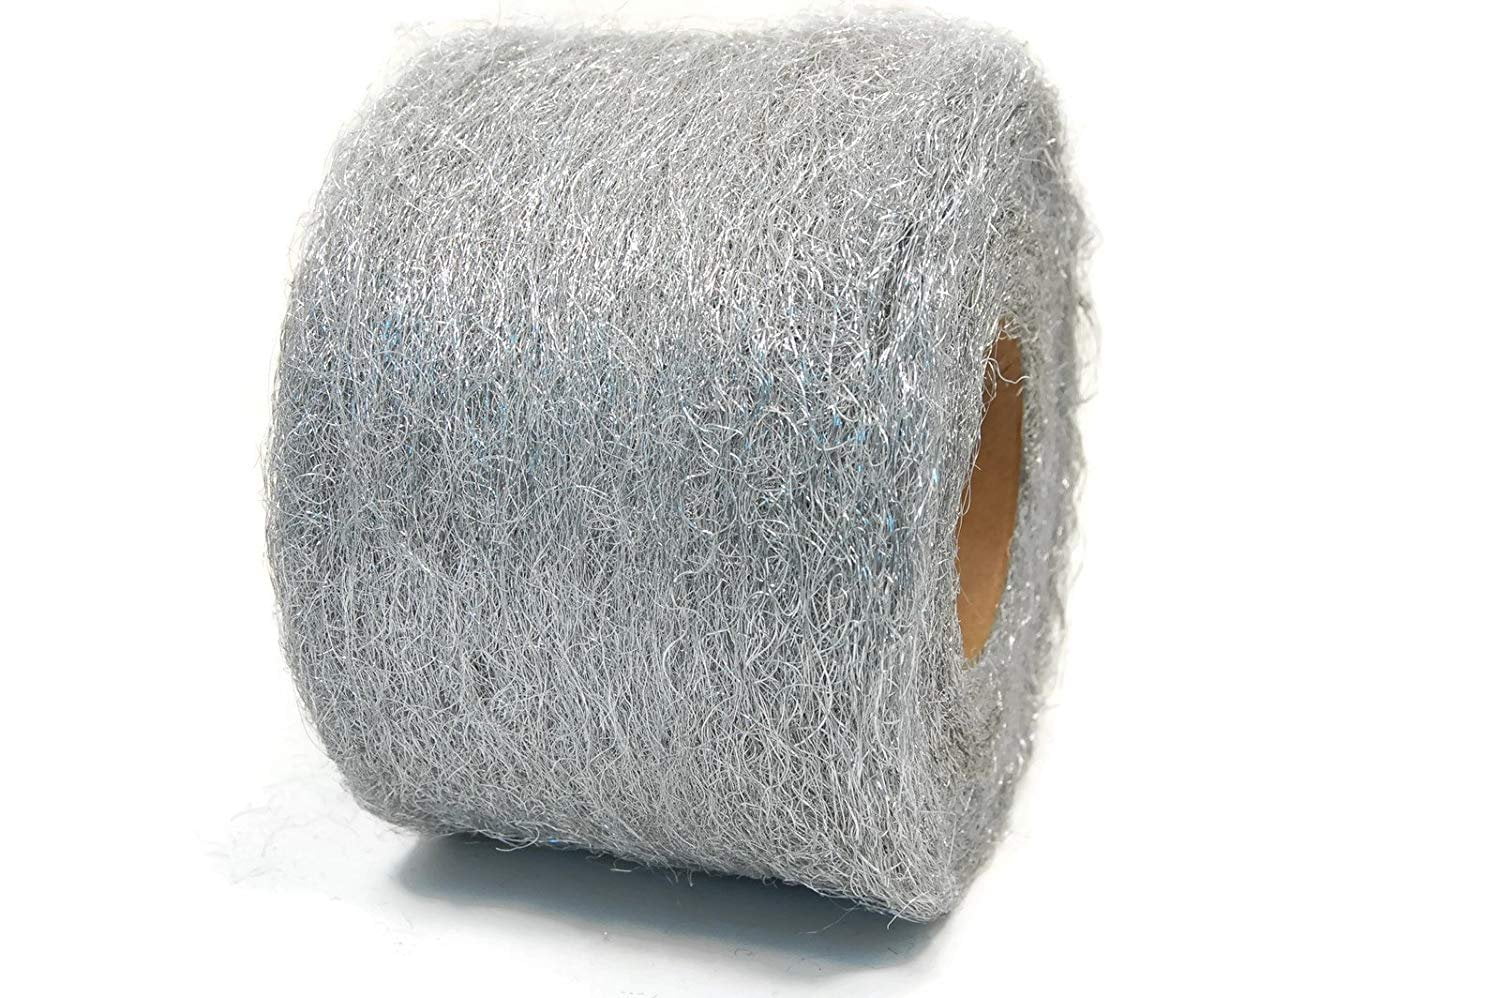  Aluminum Wool (COARSE Grade) - 1lb Roll - by Rogue River Tools.  Soft clean and polish! Pure Aluminum : Industrial & Scientific